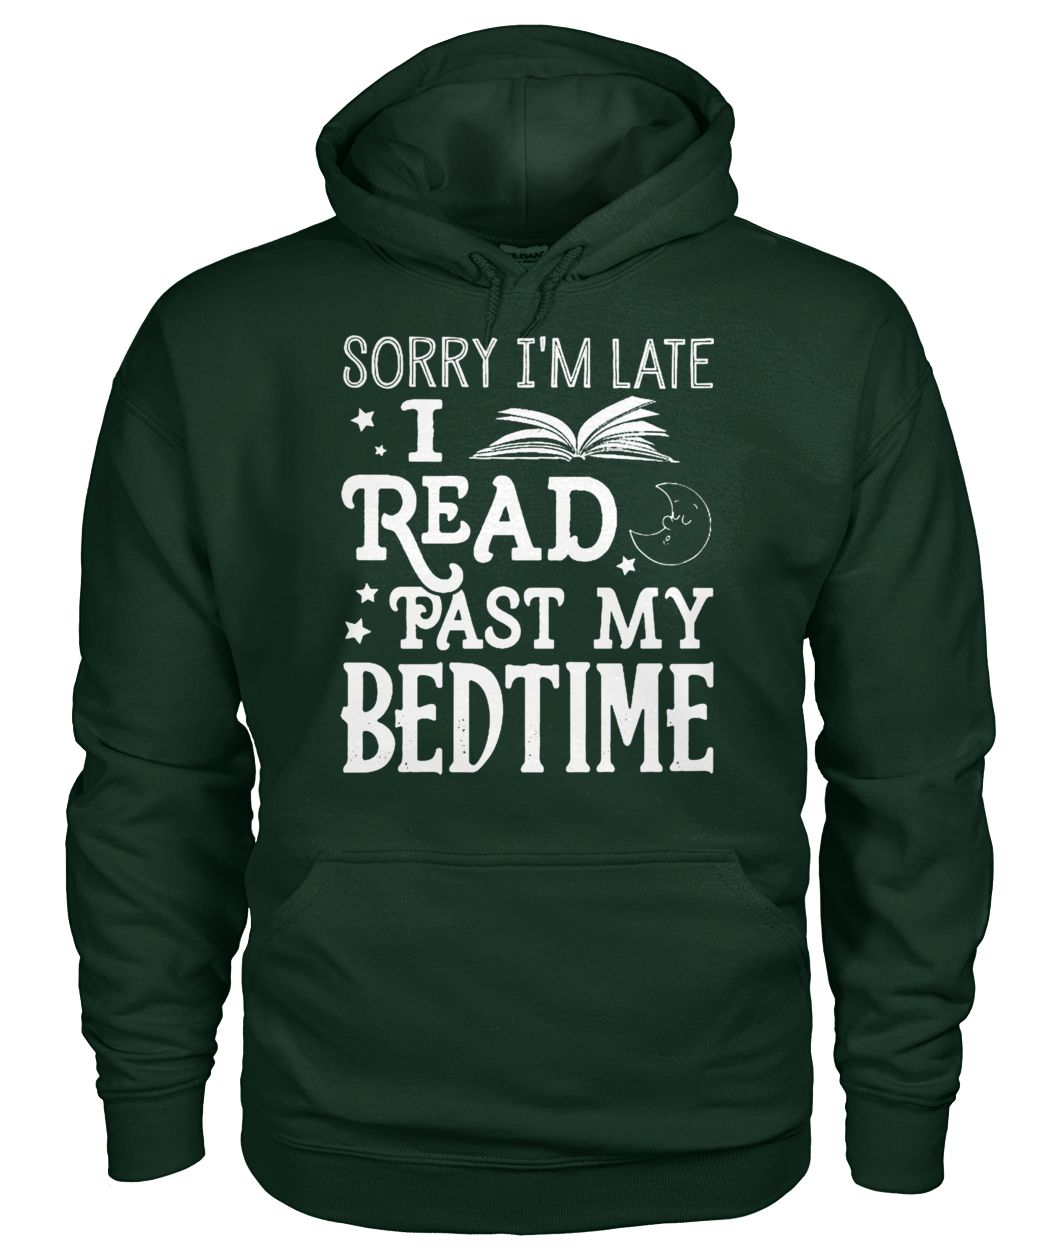 Sorry I'm late I read past my bedtime gildan hoodie